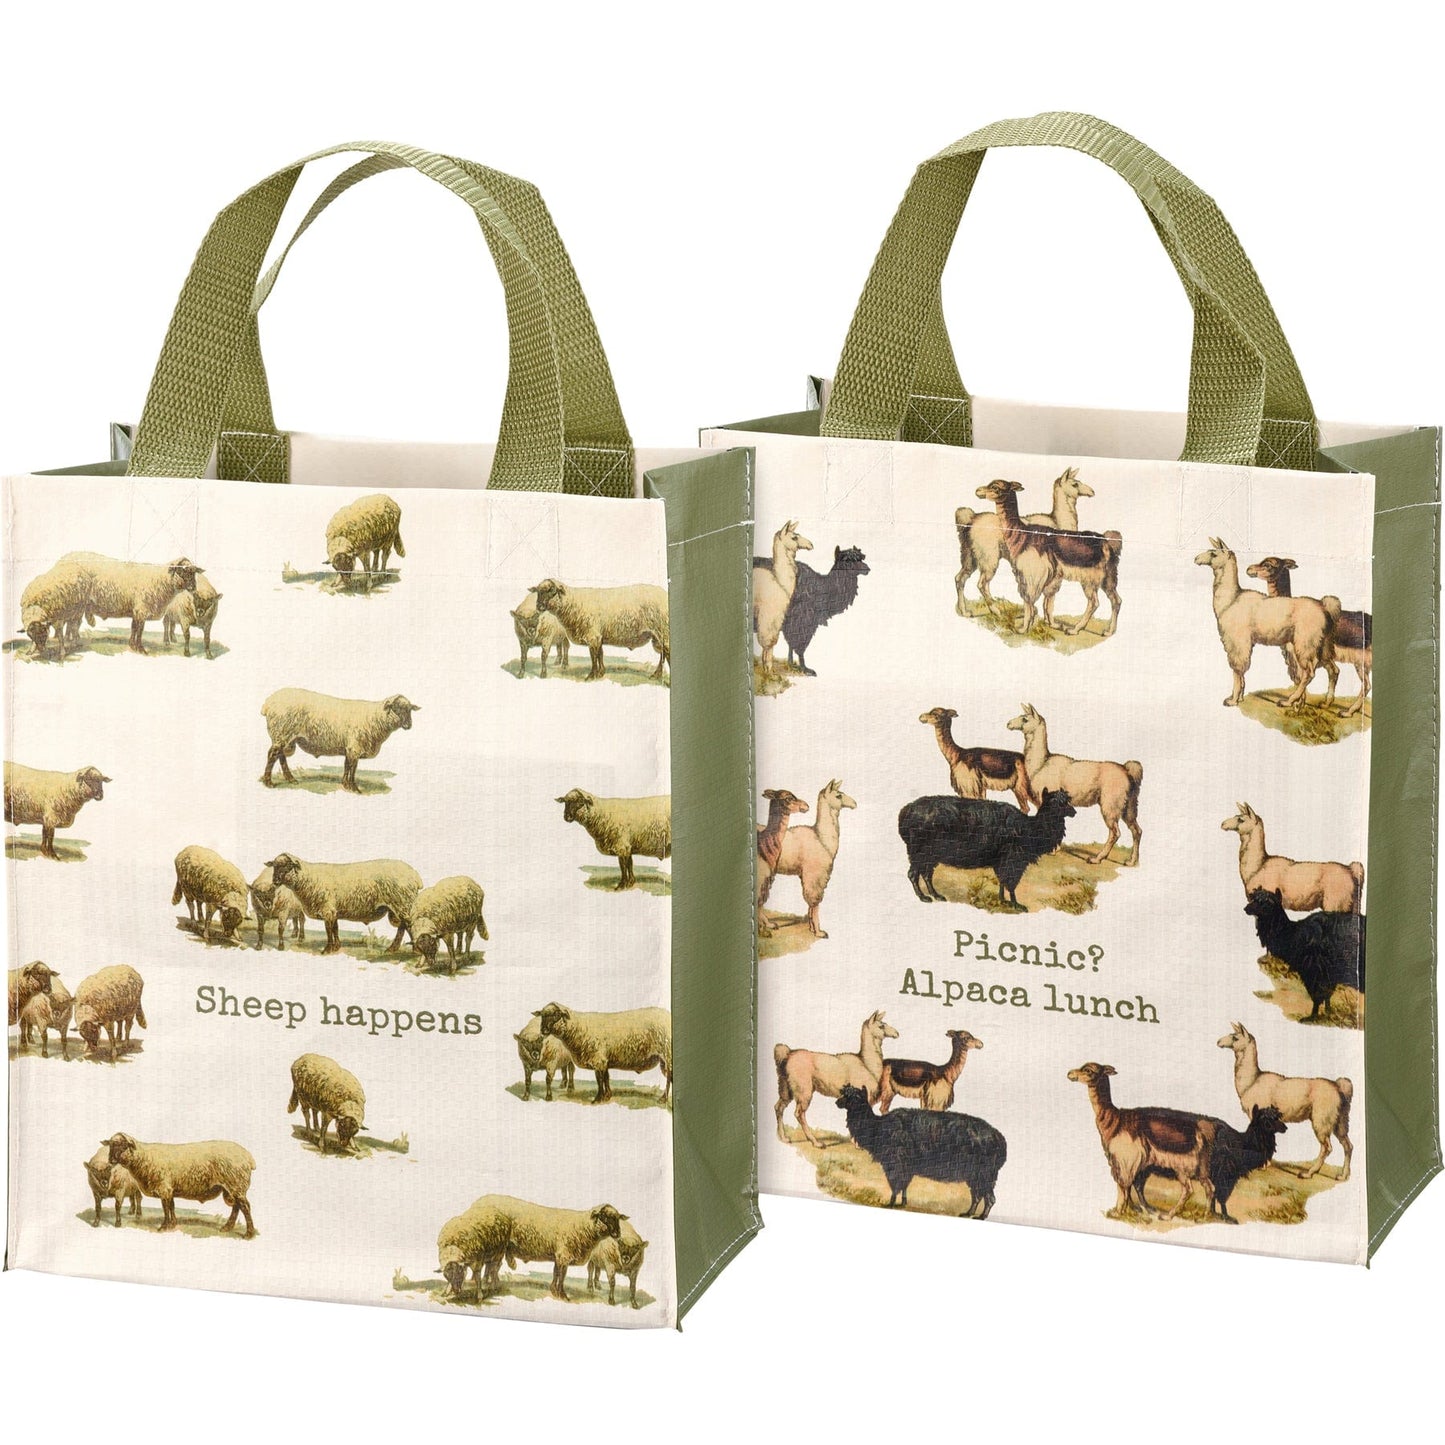 Sheep Happens - Everyday Tote Bag